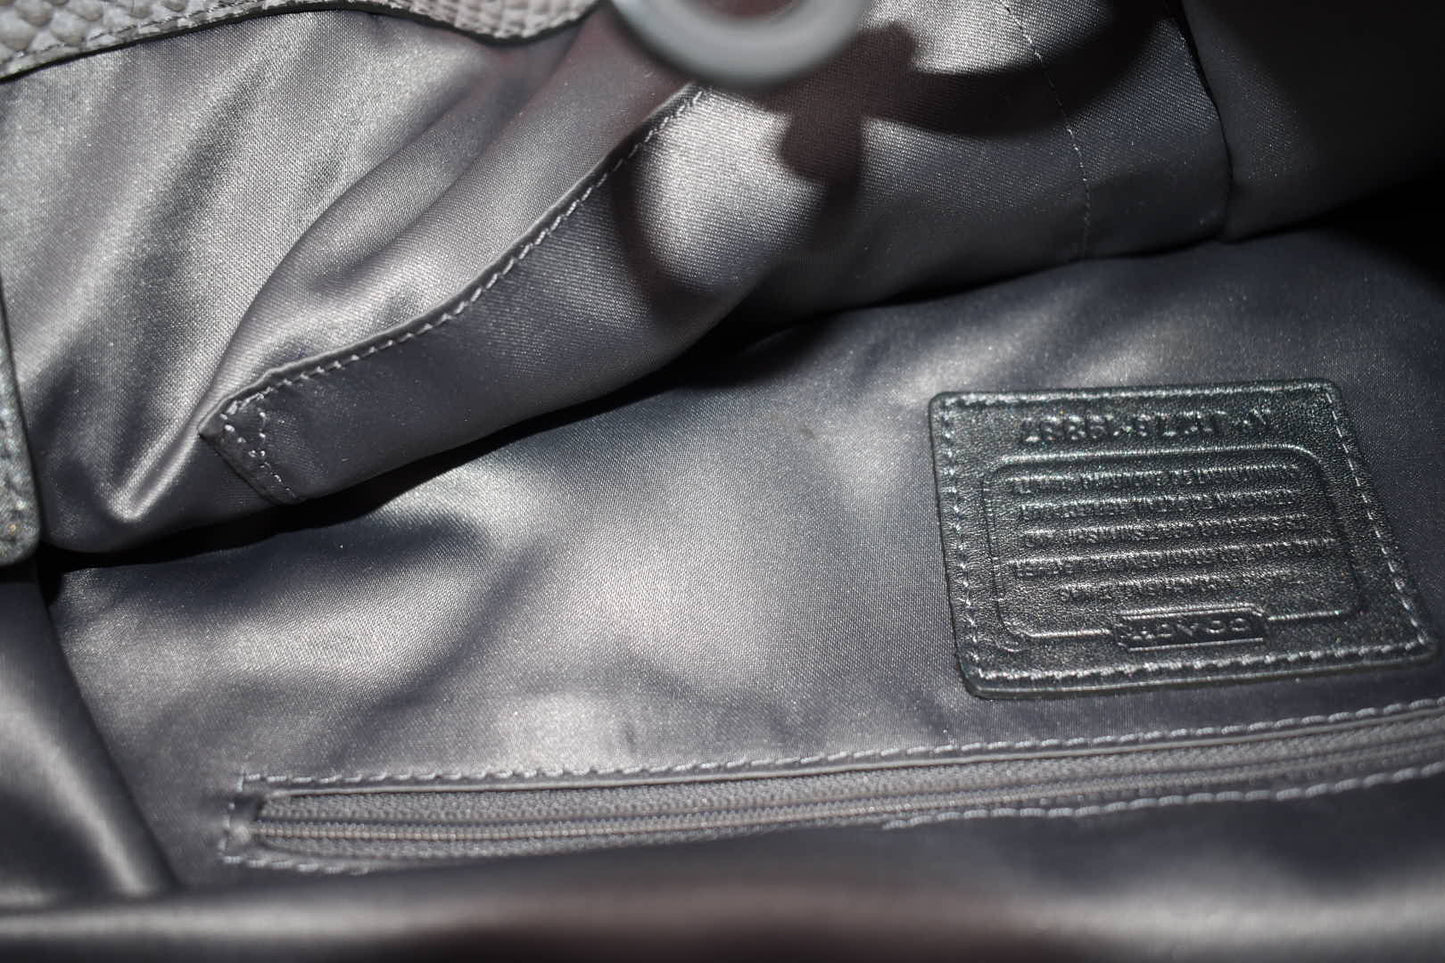 COACH Pinnacle Kristin Embossed Python Leather Tote Bag